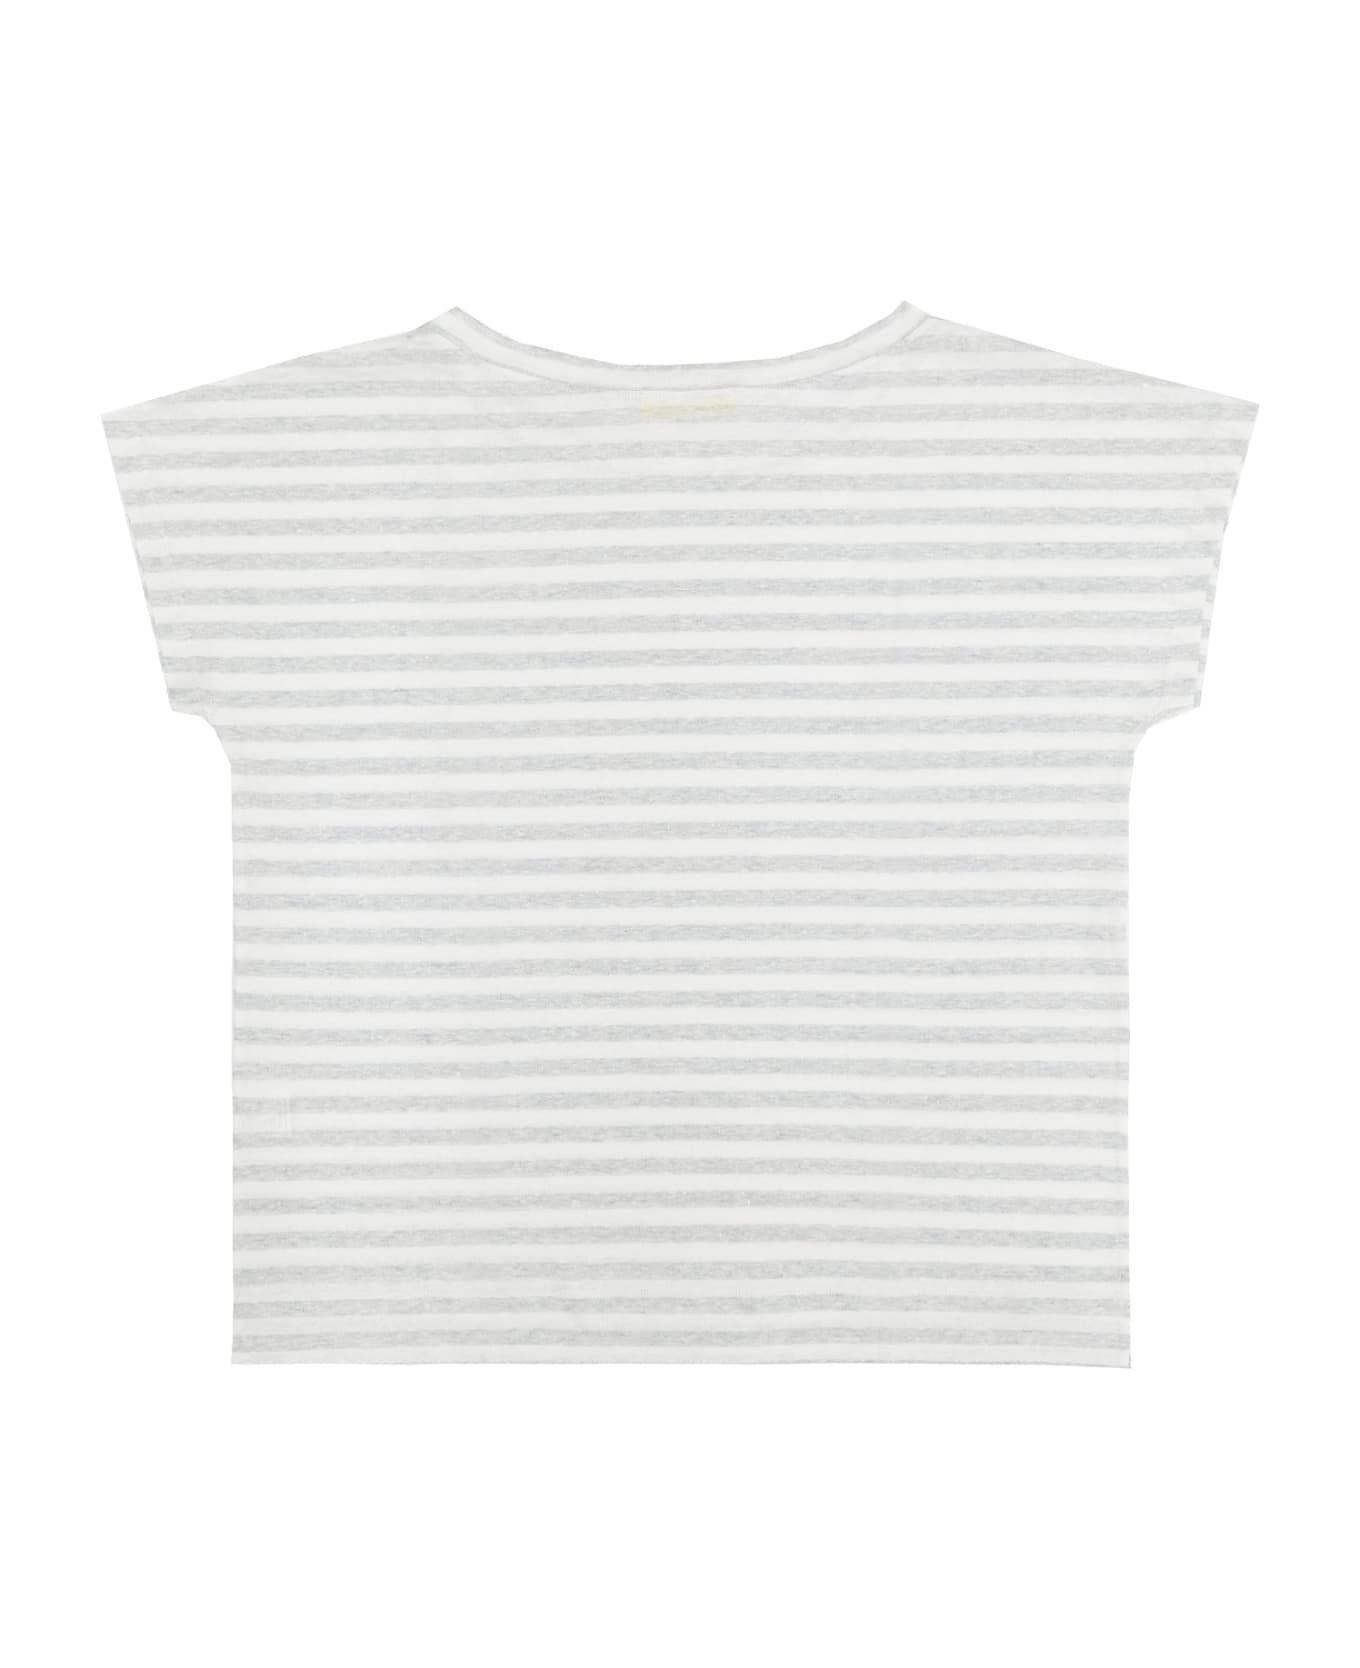 Drumohr T-shirt - White Tシャツ